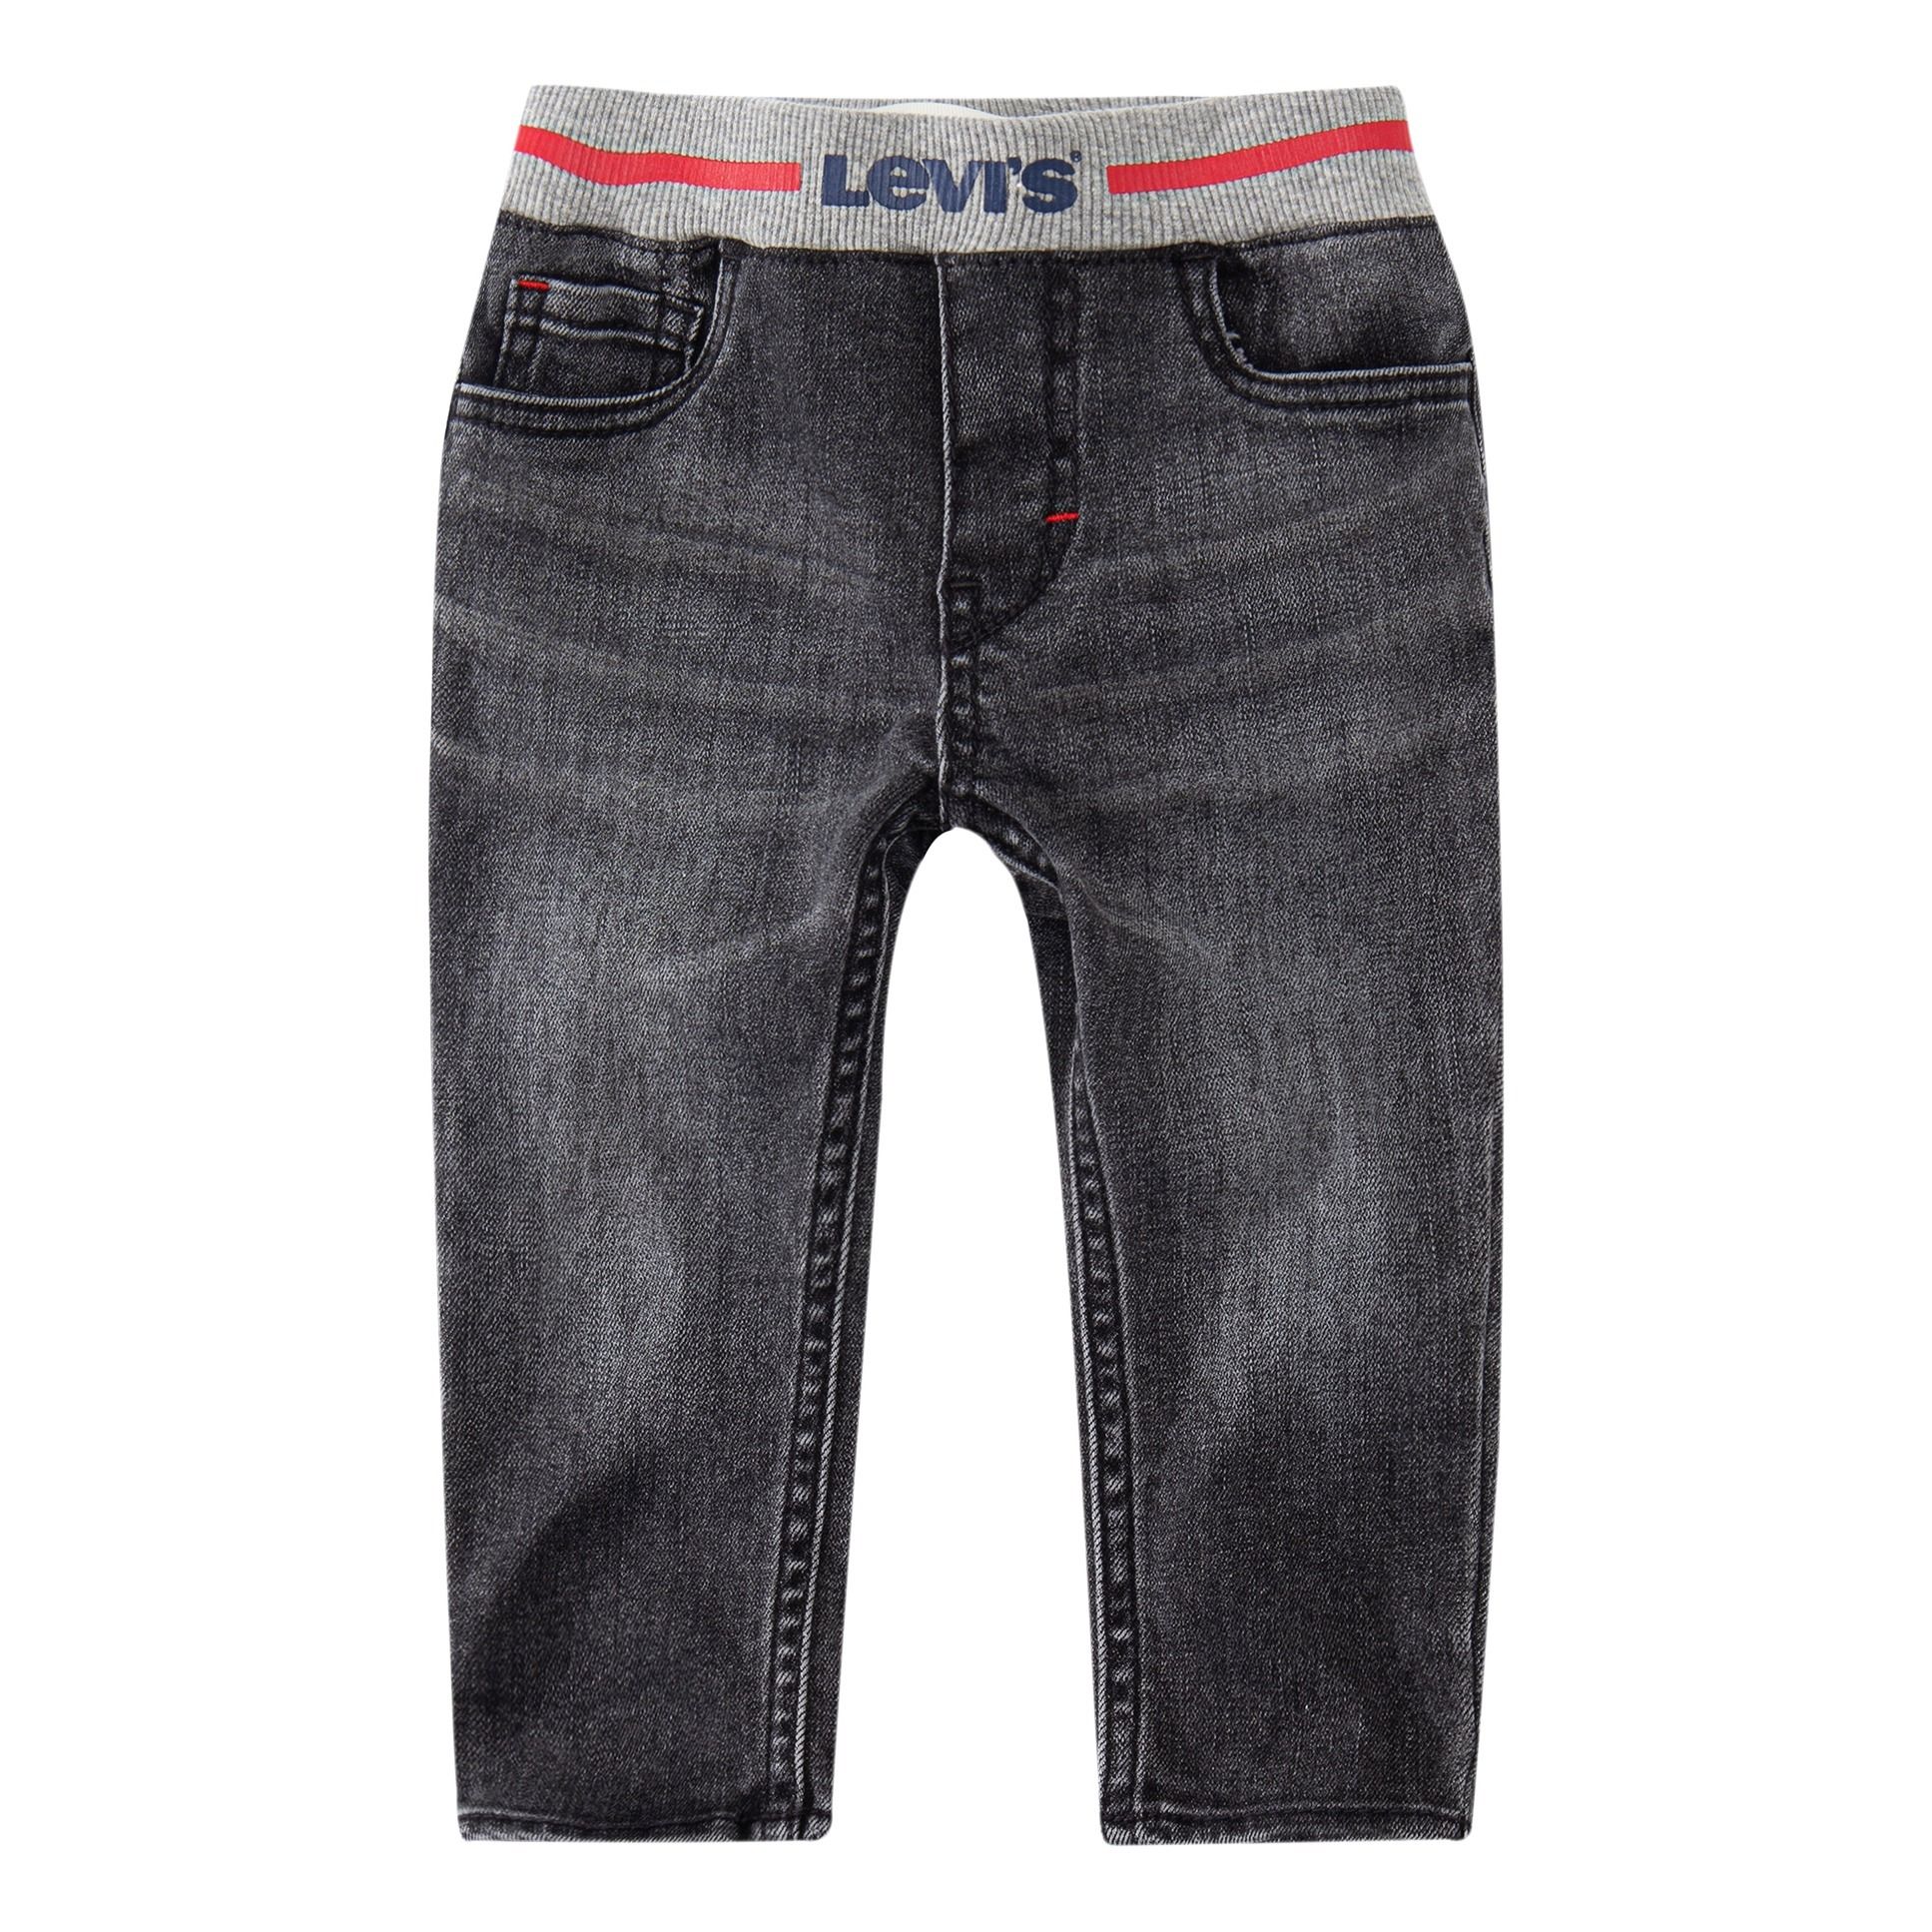 levis flex waist jeans online